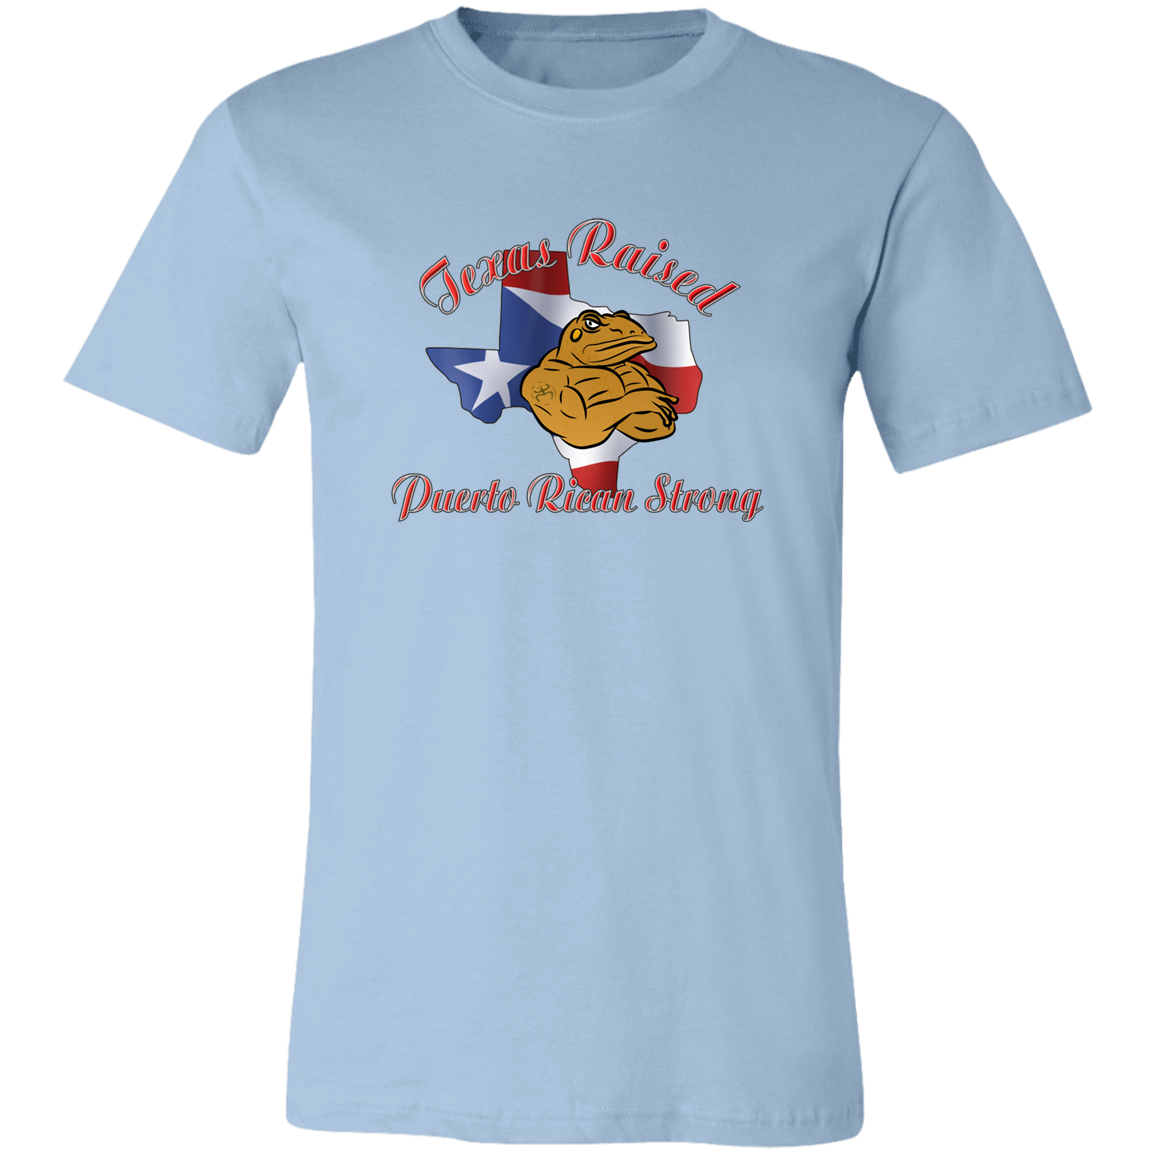 Texas Raised PR Strong Unisex  T-Shirt - Puerto Rican Pride